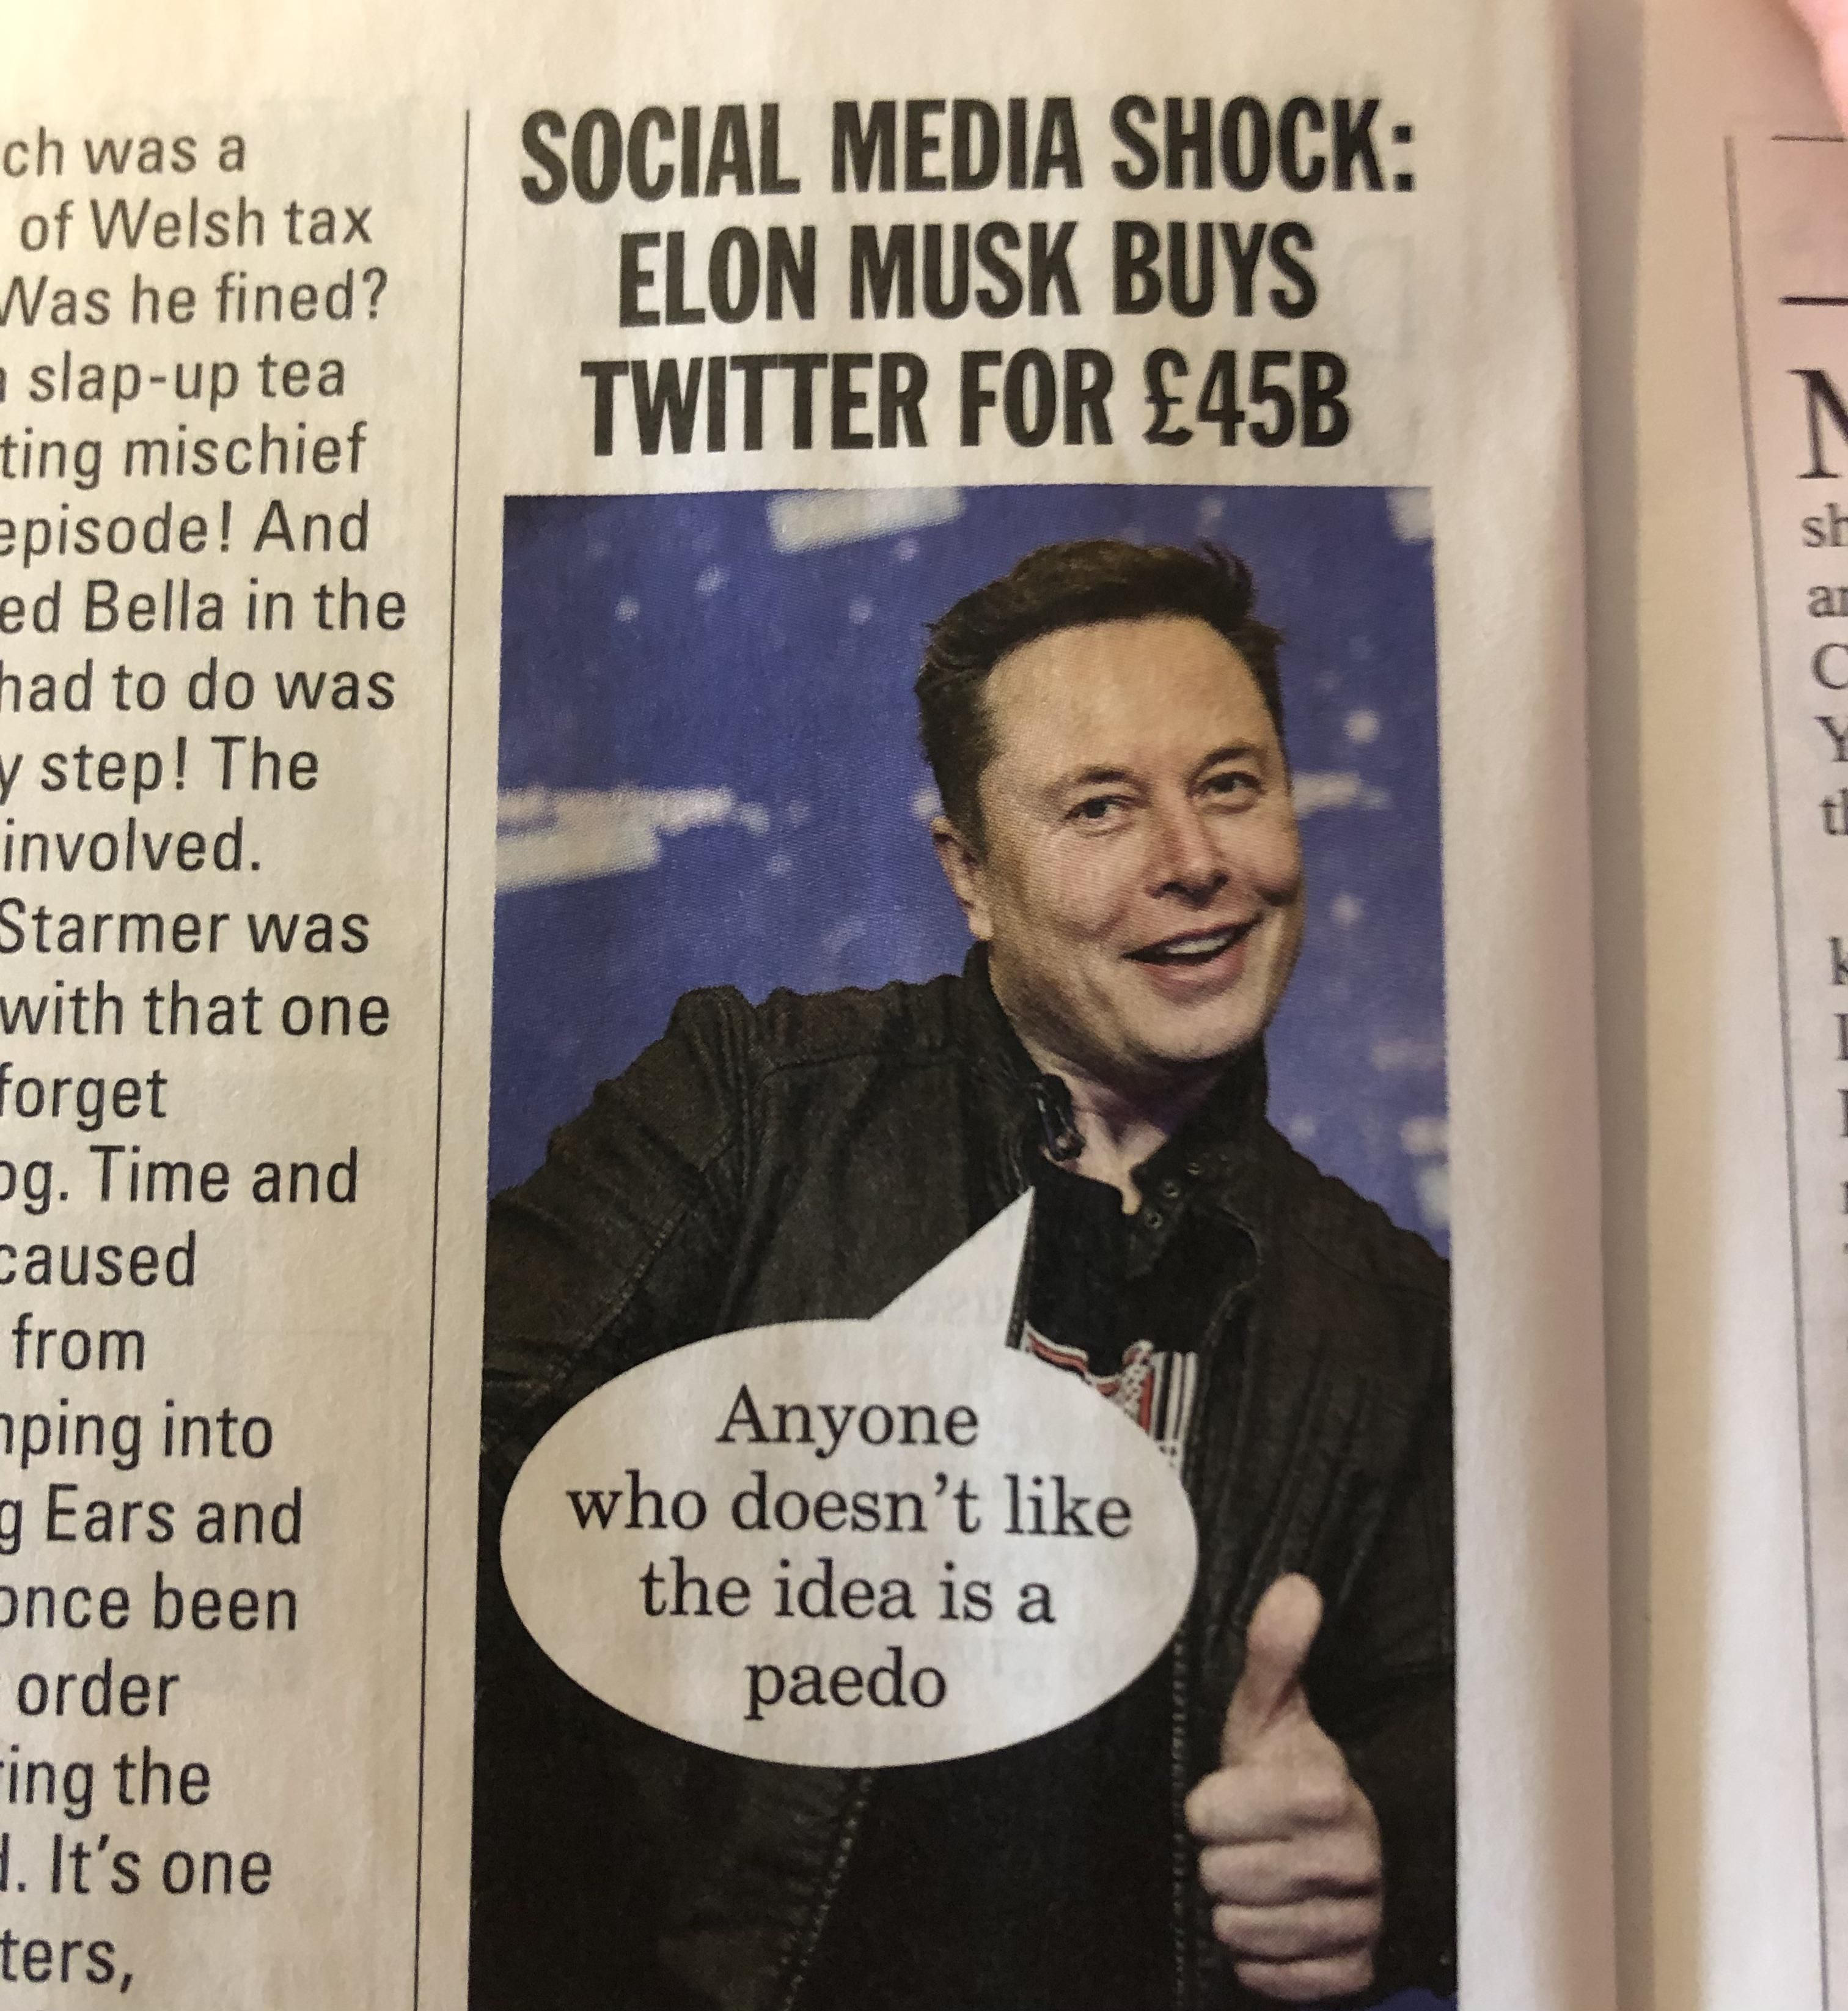 British satirical magazine Private Eye delicately handling the Elon Musk/Twitter takeover